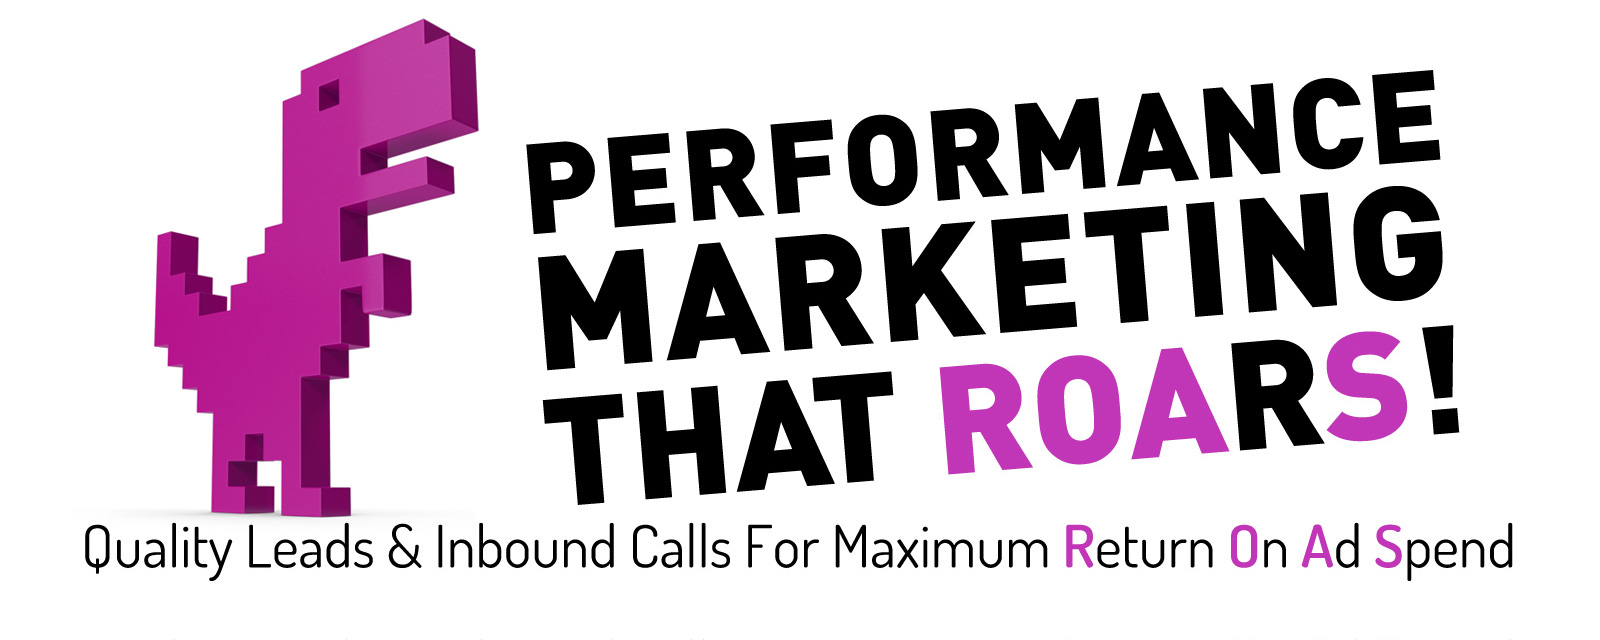 Rex-Direct-Net-Performance-Marketing-that-ROARS